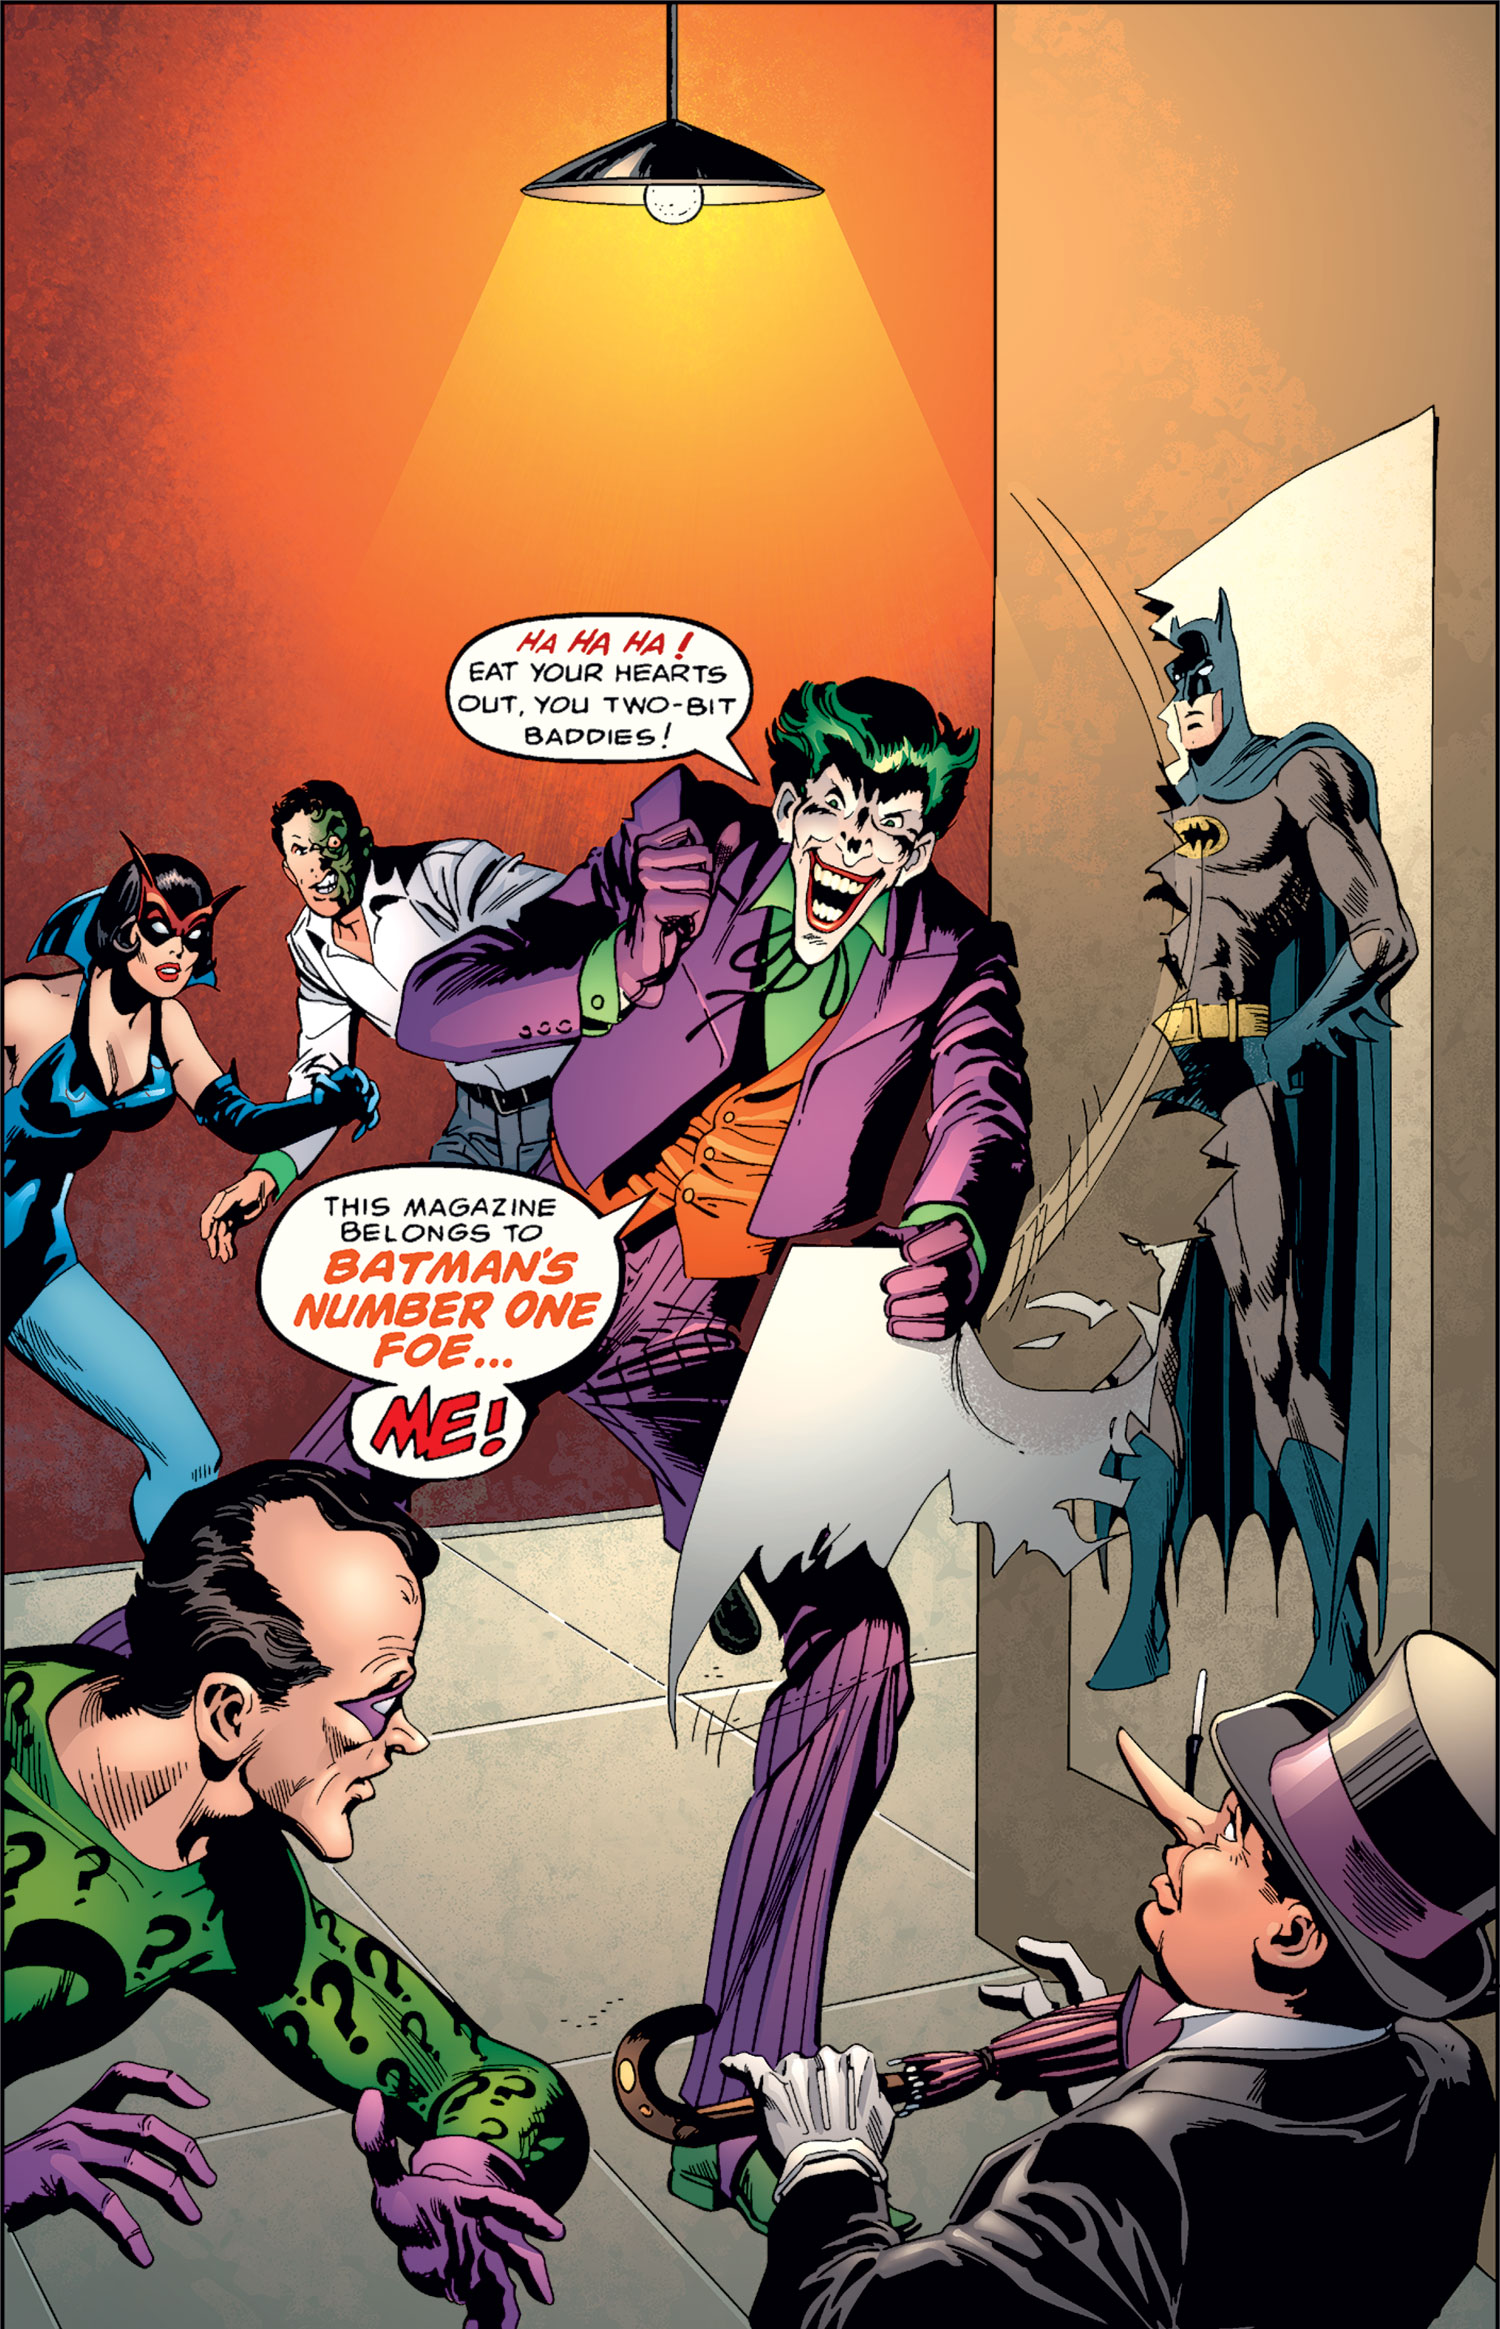 The Joker: The Clown Prince of Crime